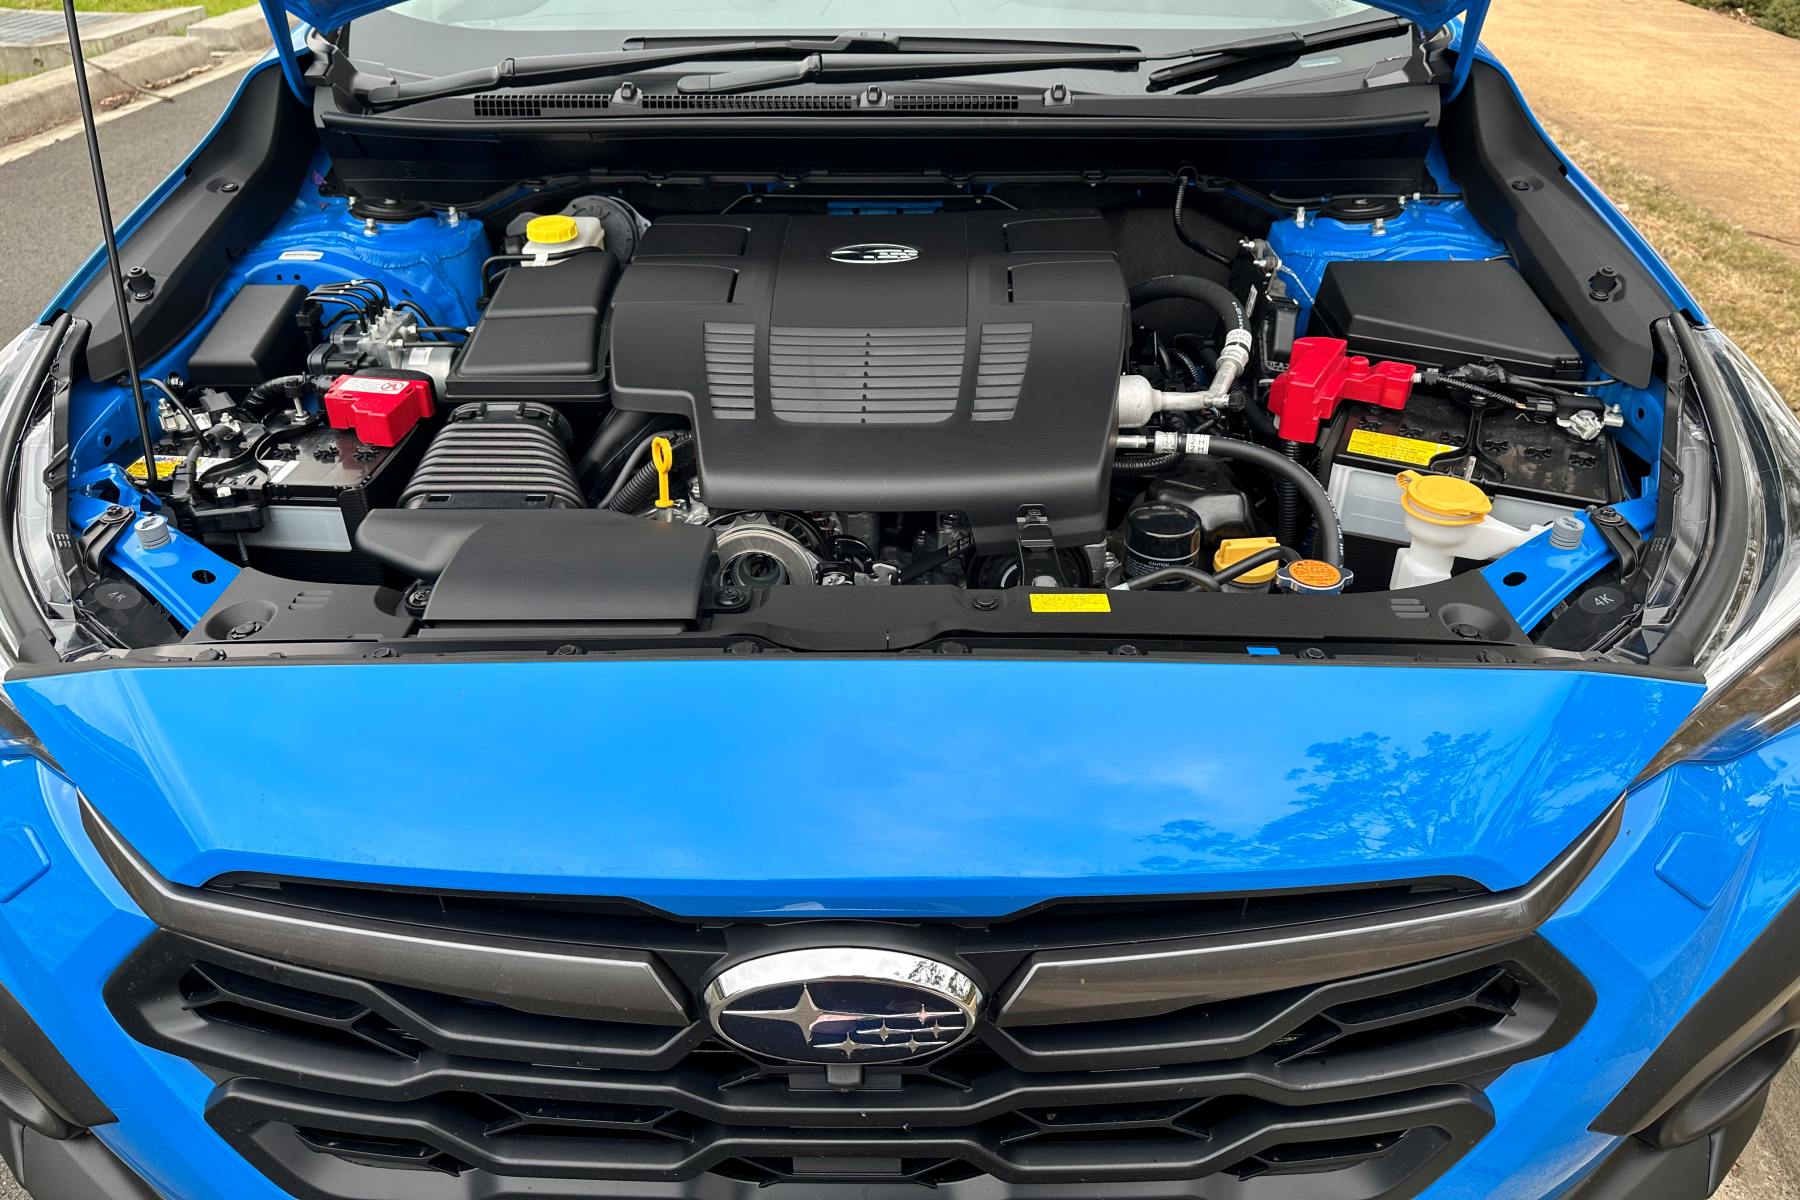 Subaru Crosstrek Hybrid S engine